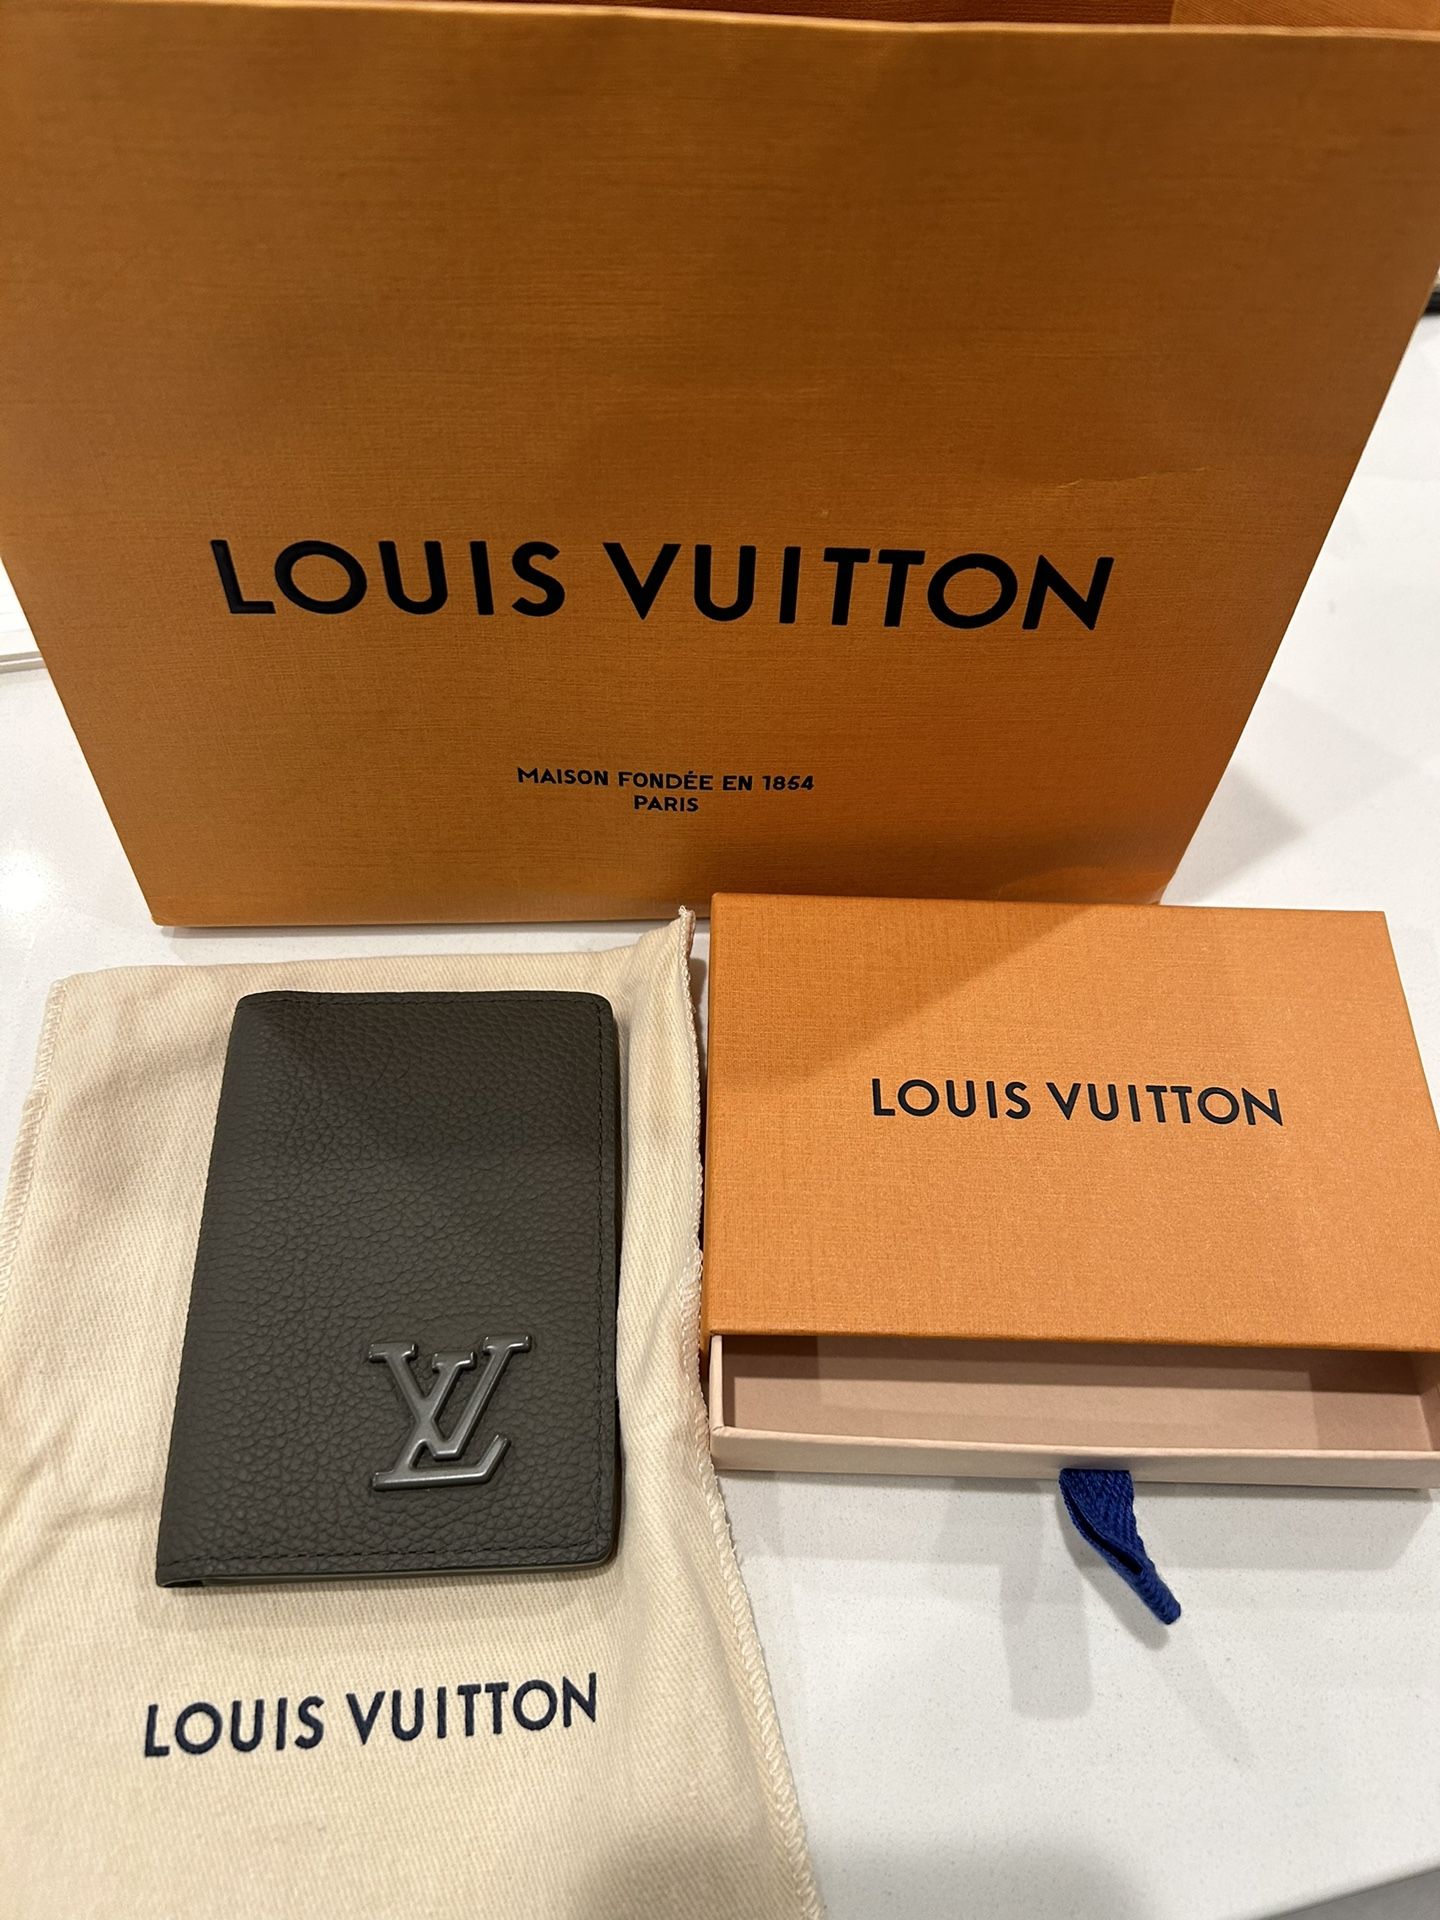 LOUIS VUITTON (Small Wallet)